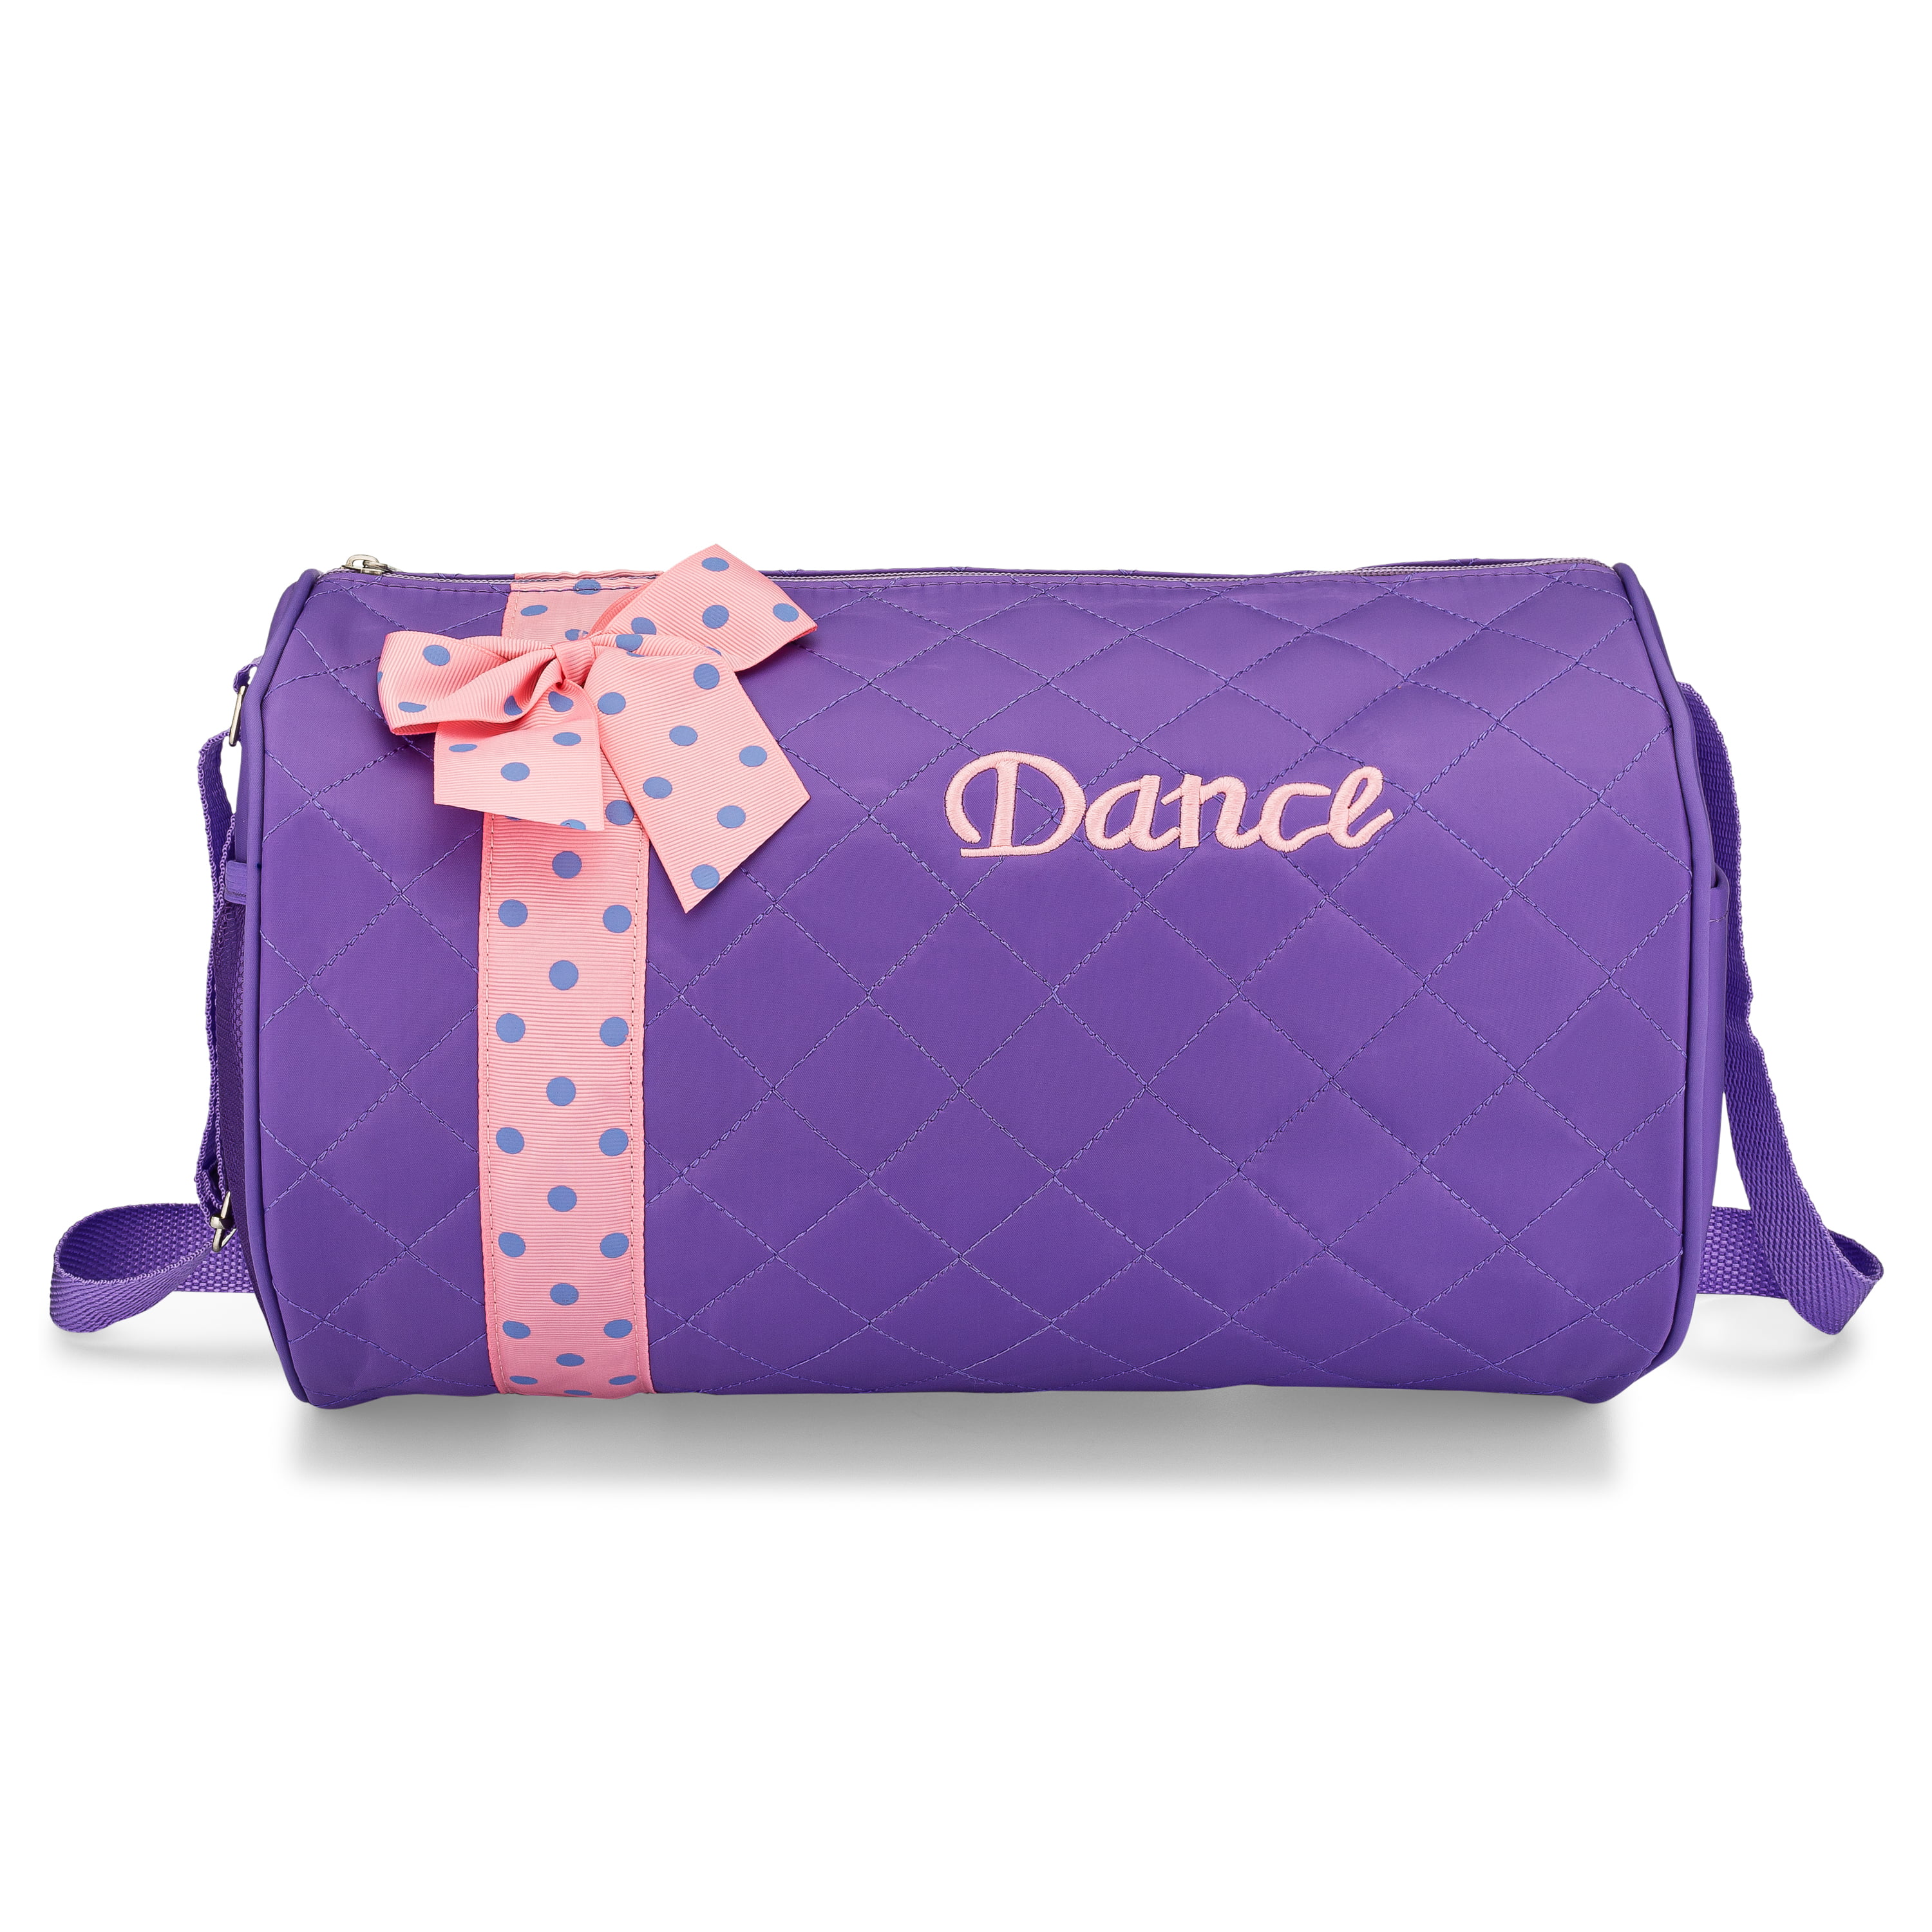 I LOVE DANCING DUFFEL BAG Zipper Fabric Bows Tote Purple Girl Child Tween Dancer